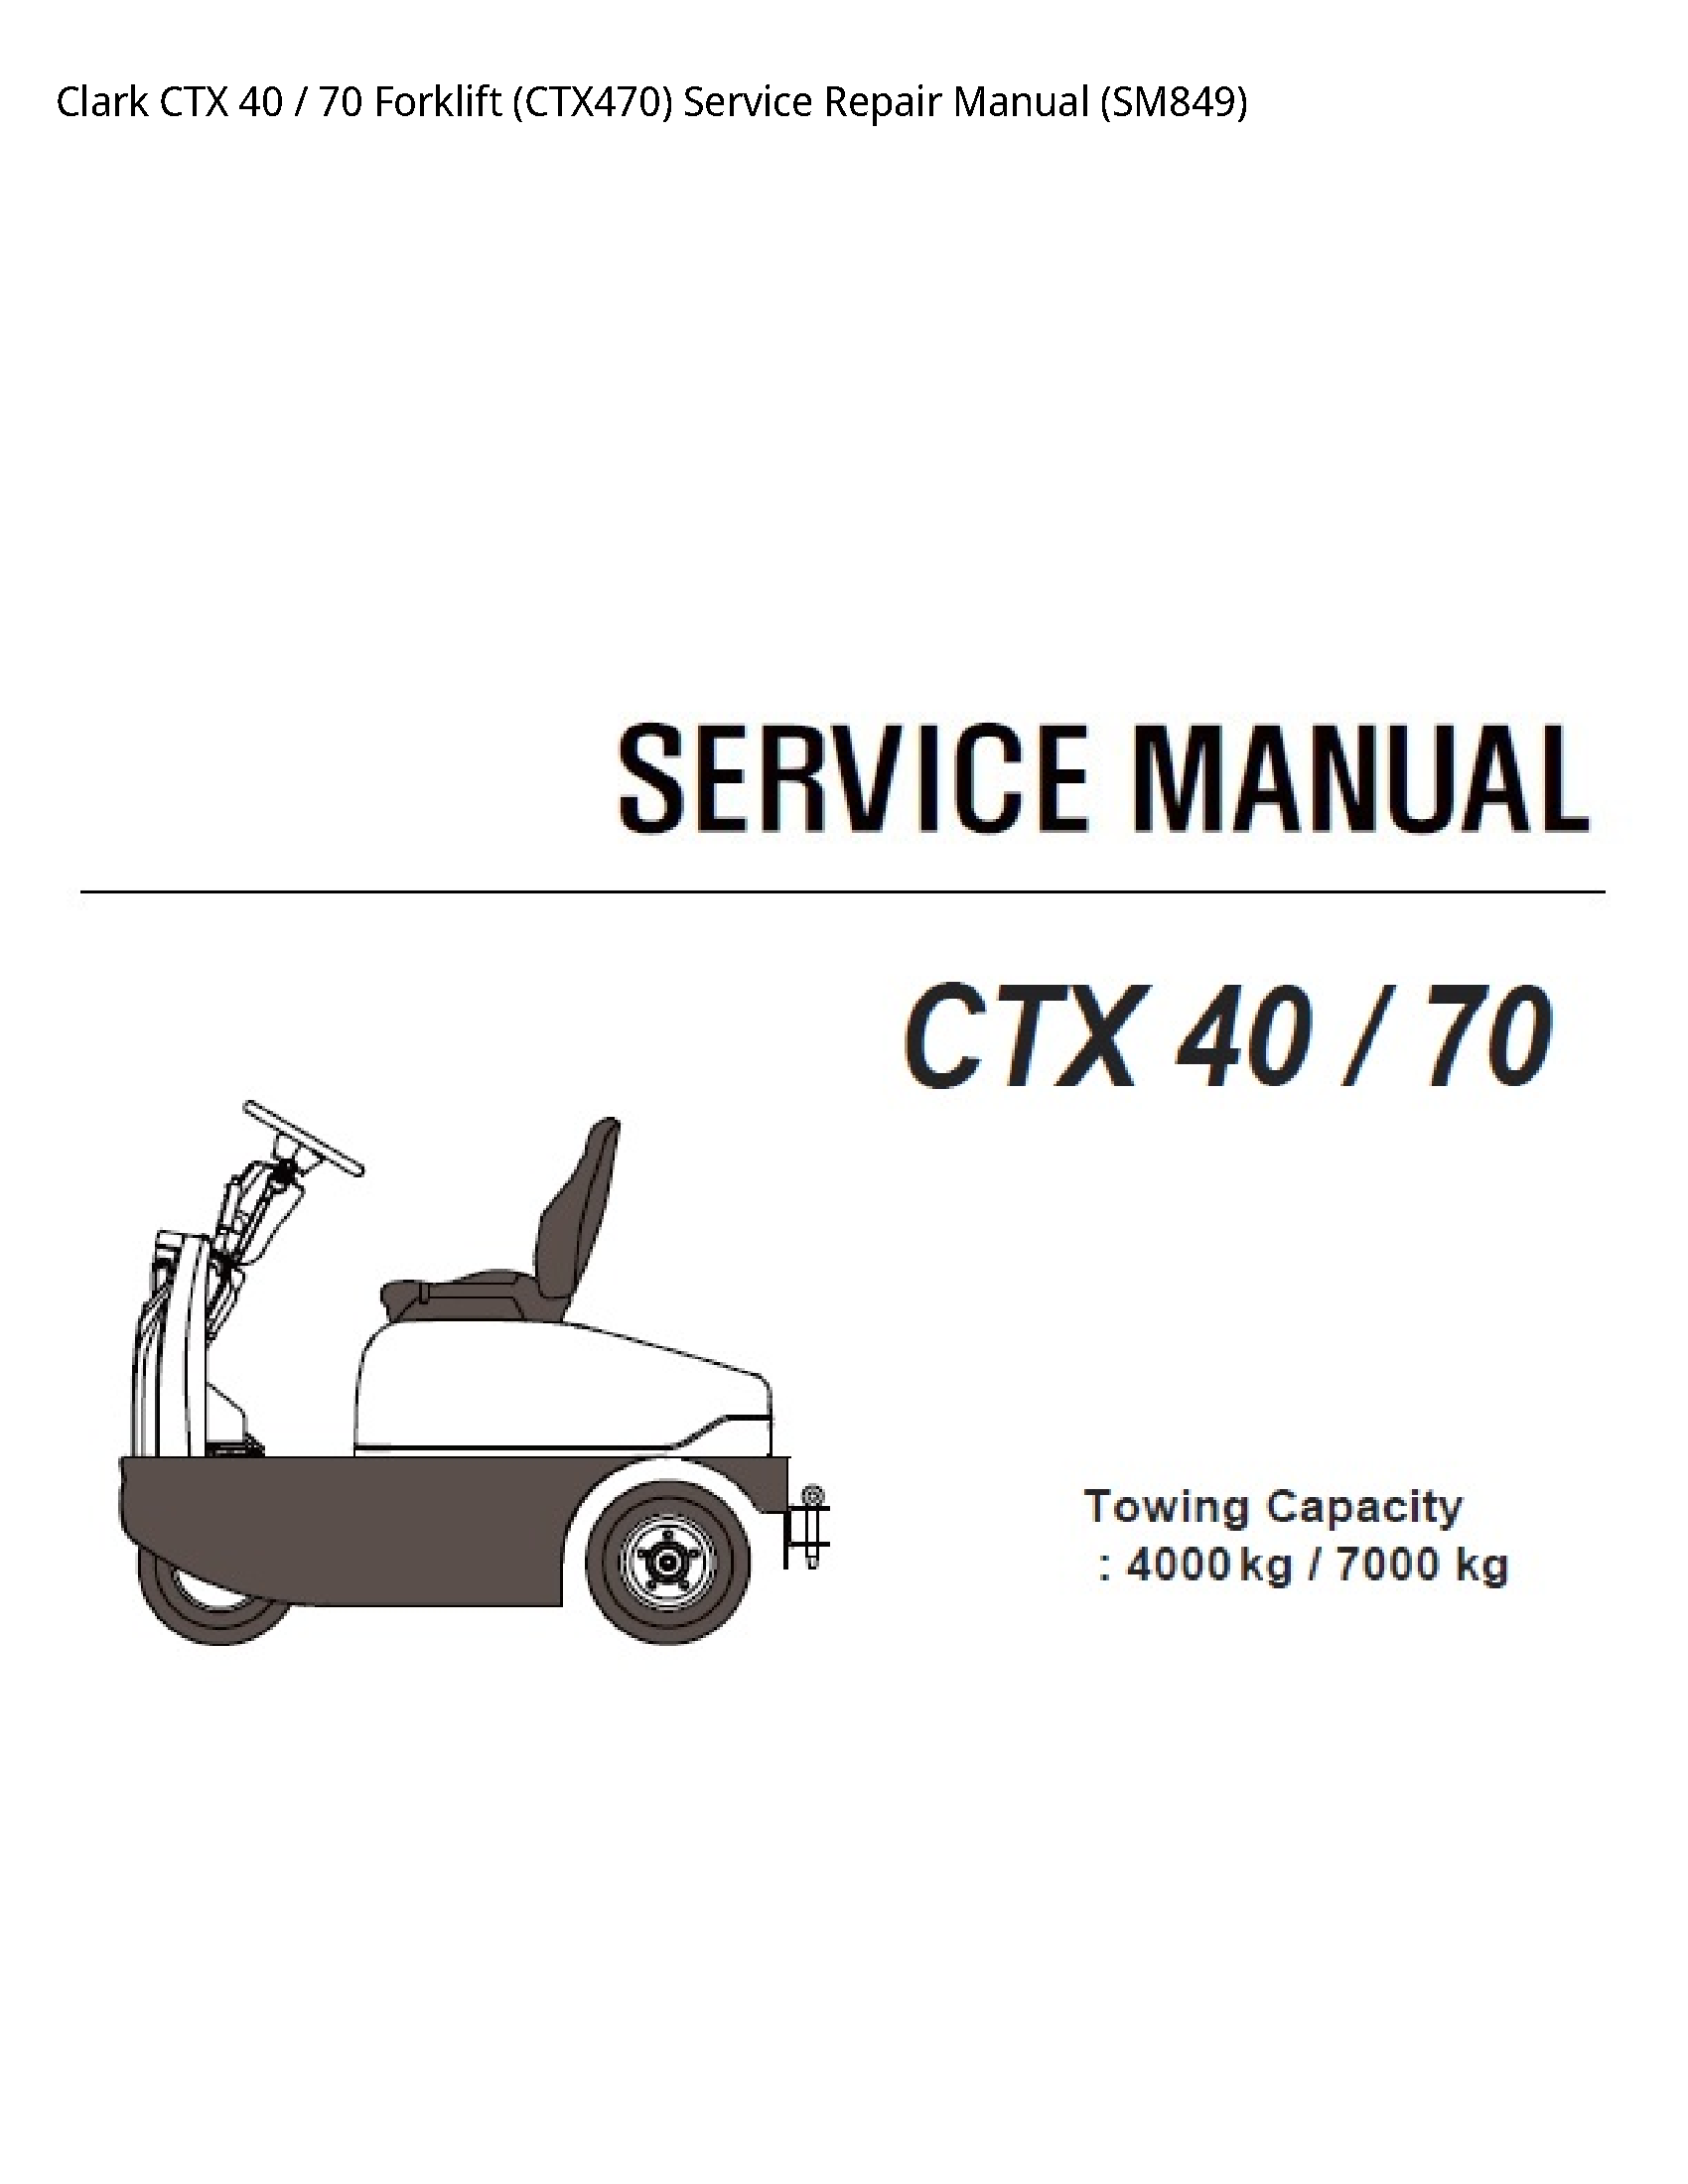 Clark 40 CTX Forklift manual